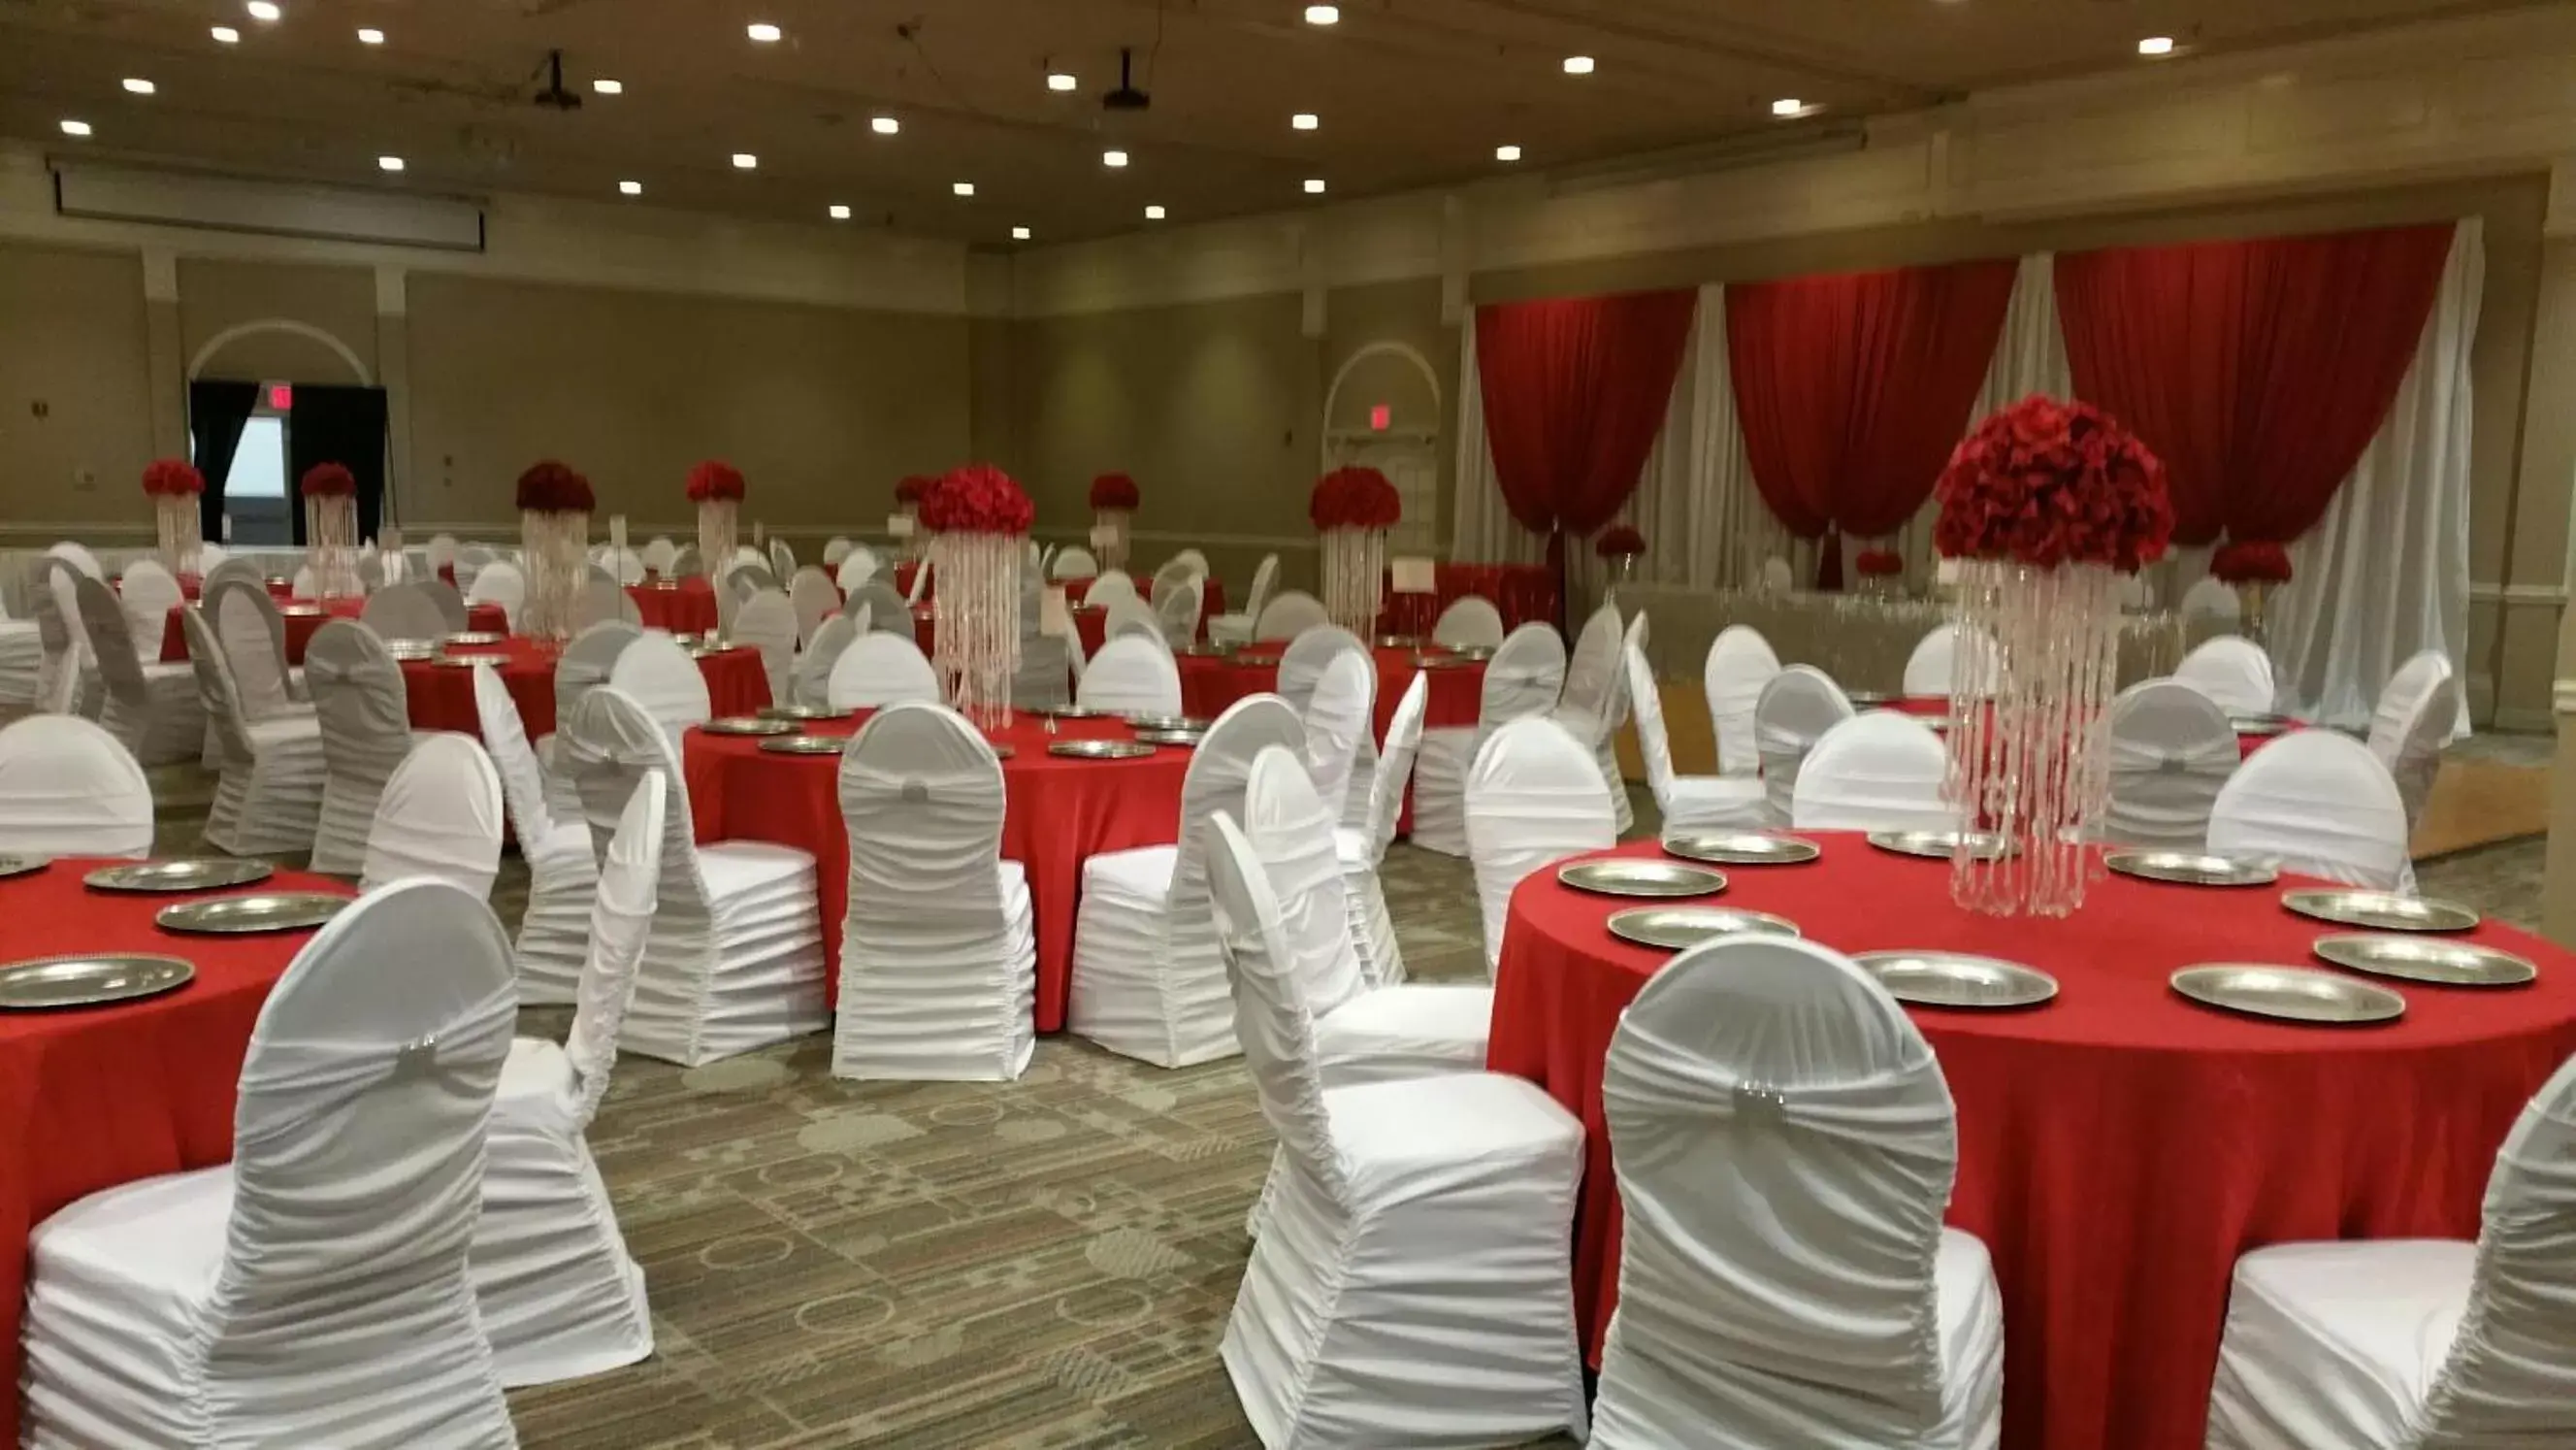 Decorative detail, Banquet Facilities in Plaza Hotel & Casino